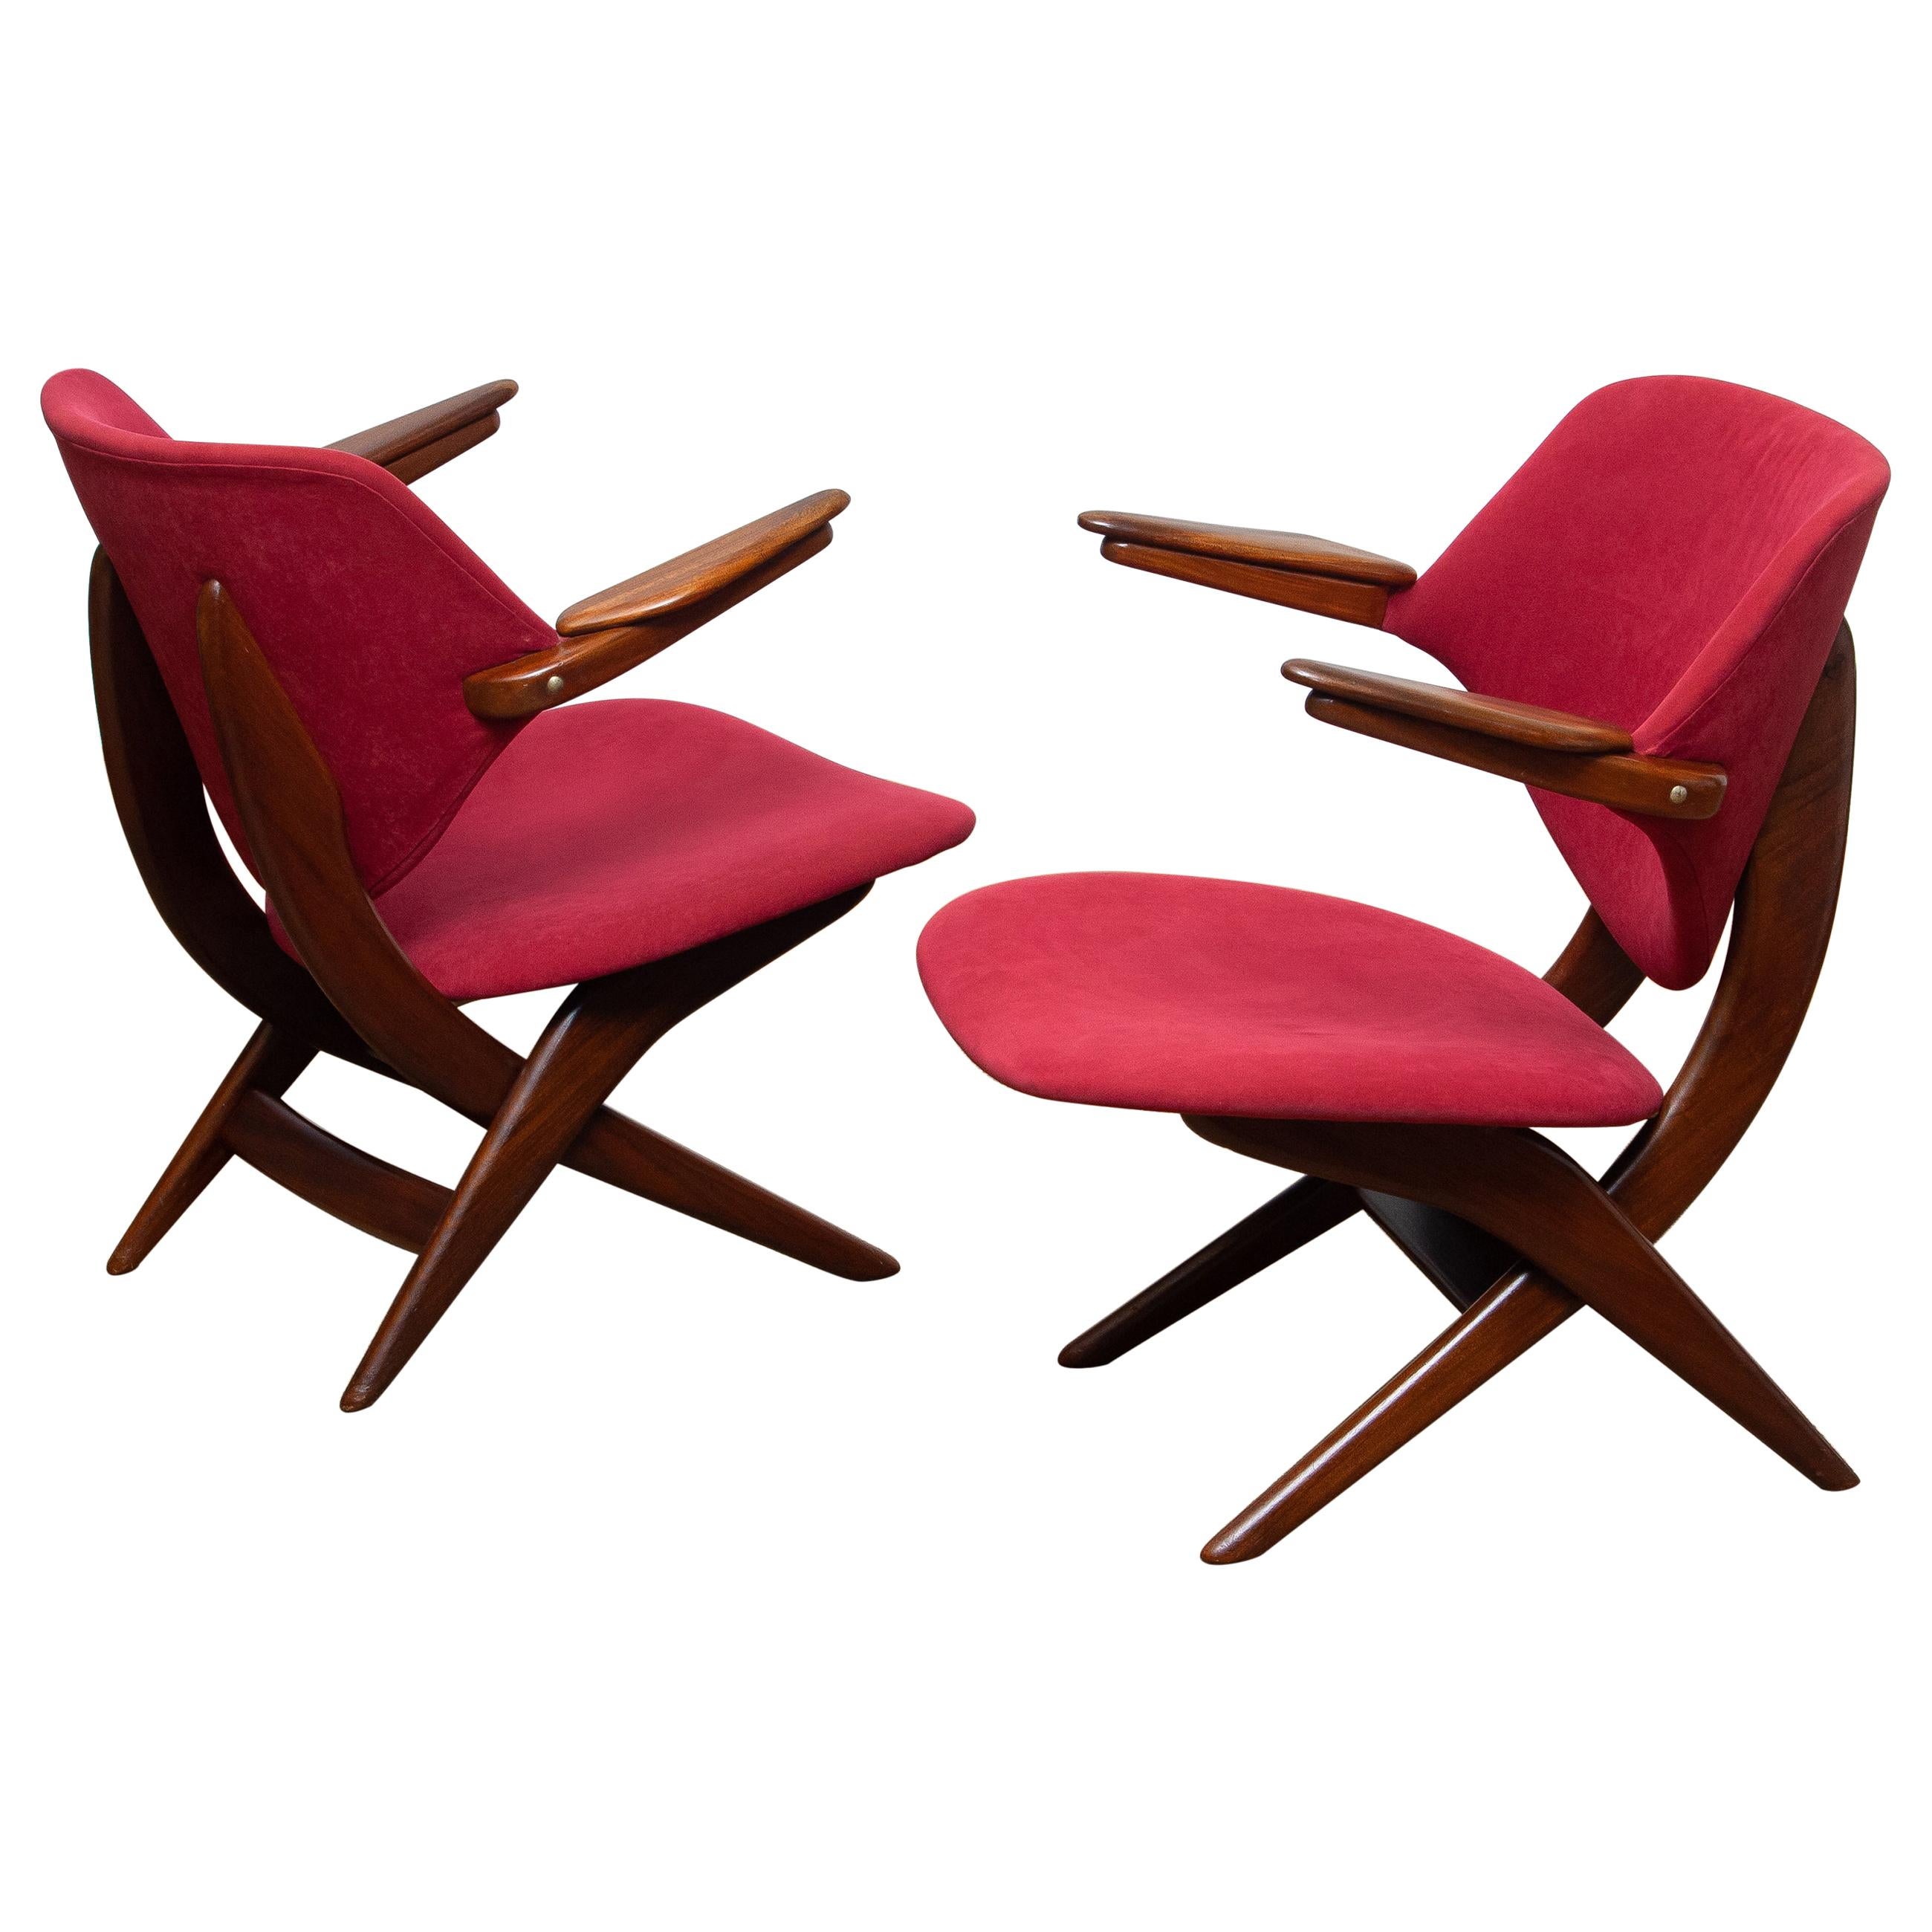 1950s, Set of Two Teak Lounge/Easy Chairs by Louis Van Teeffelen for Wébé In Good Condition In Silvolde, Gelderland